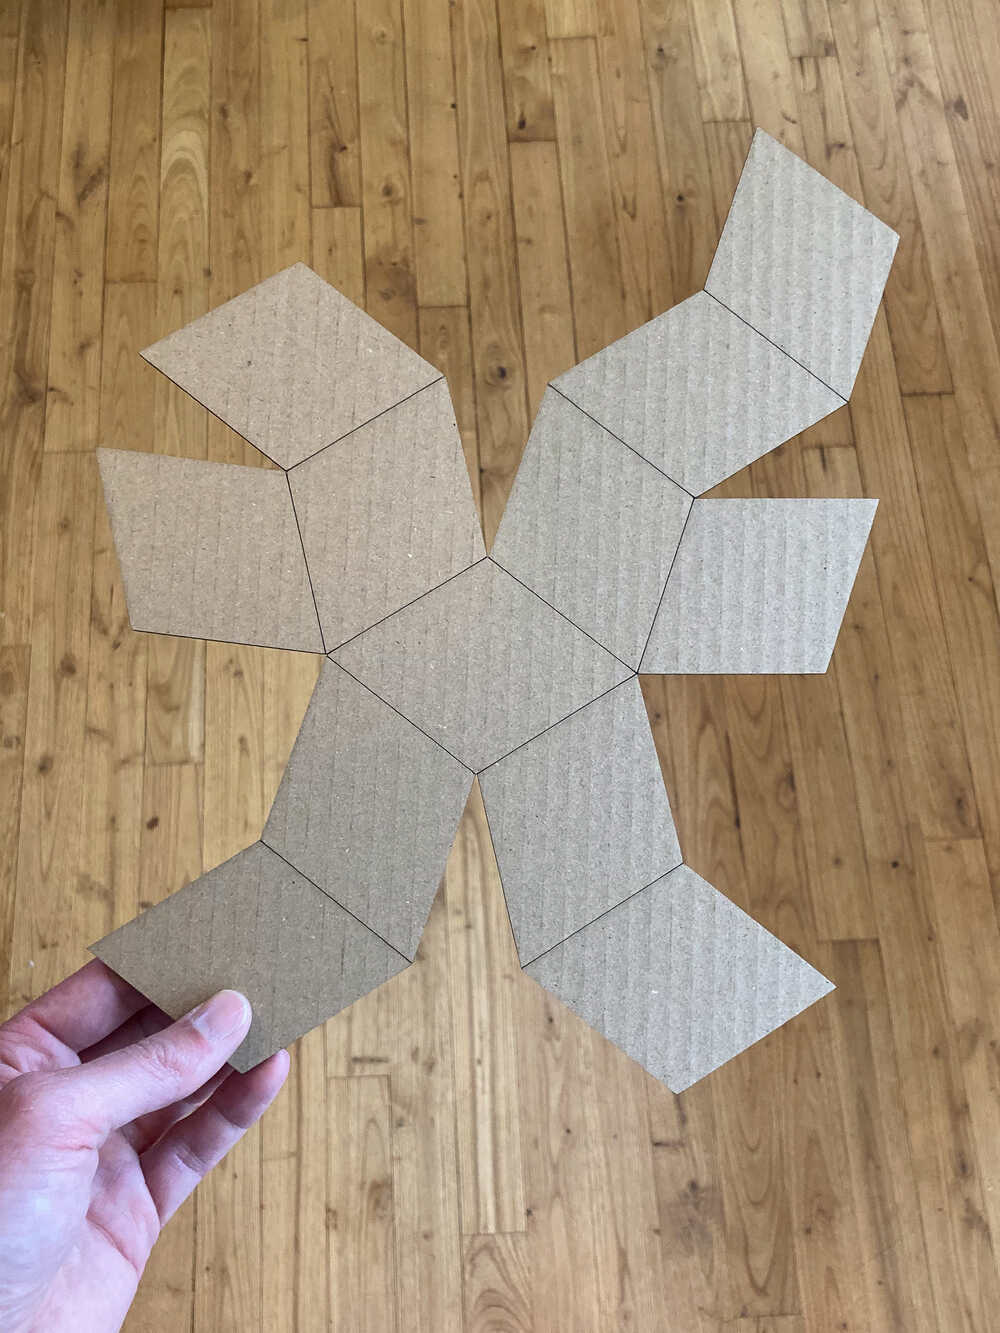 15_W/dodecahedron_net_cardboard.jpg